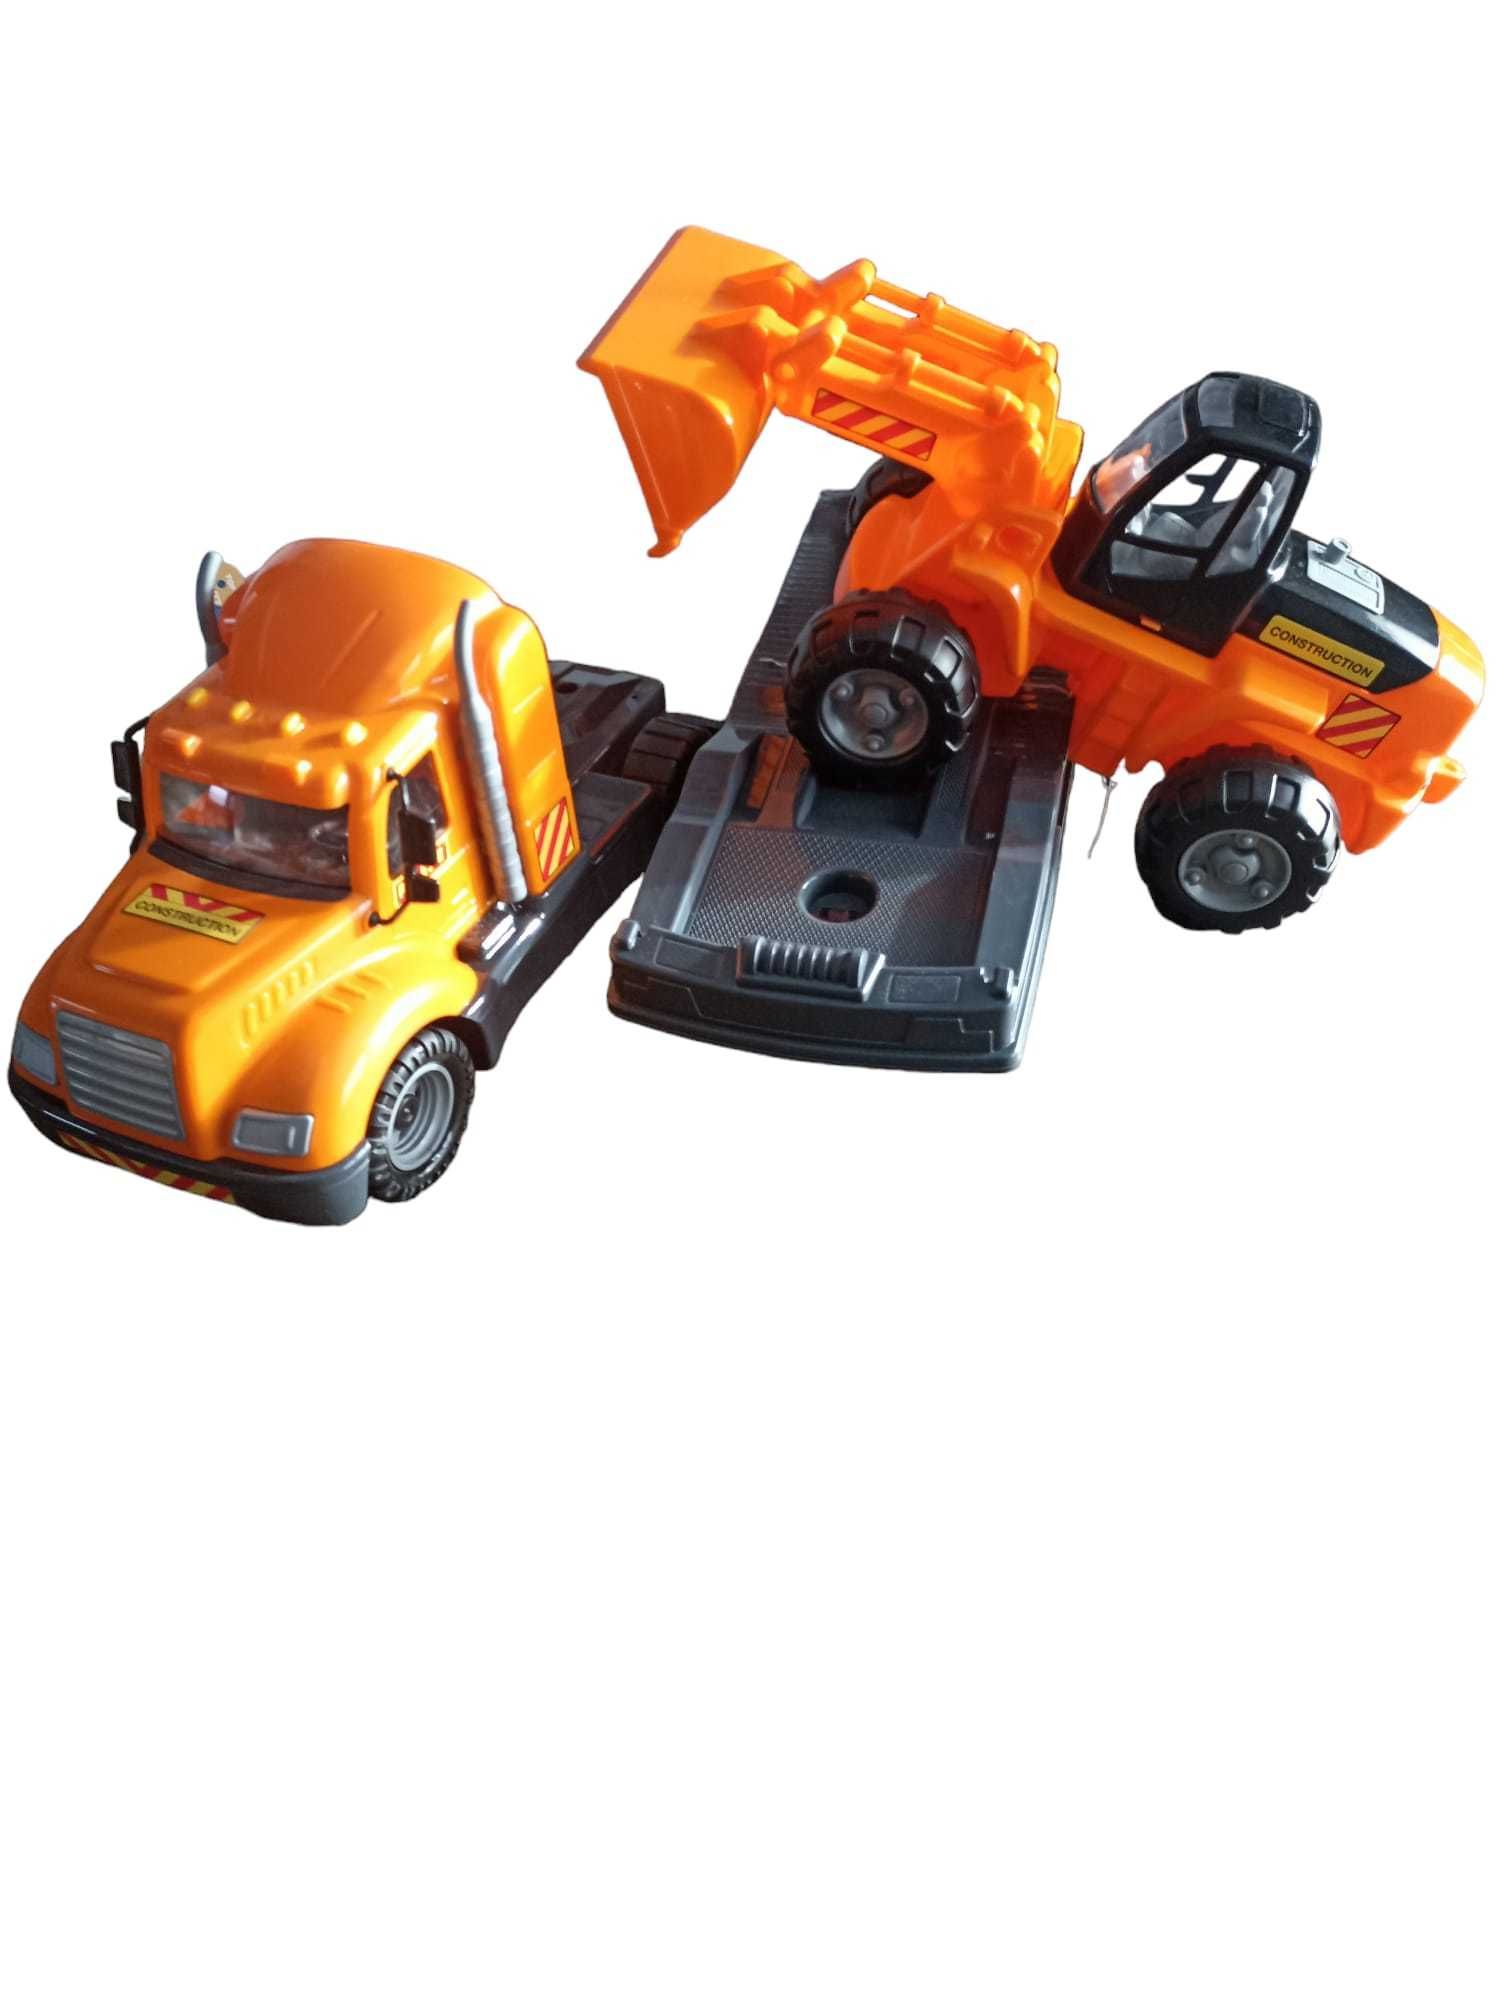 Super zabawka zestaw ciężarówka laweta koparko - ładowarka